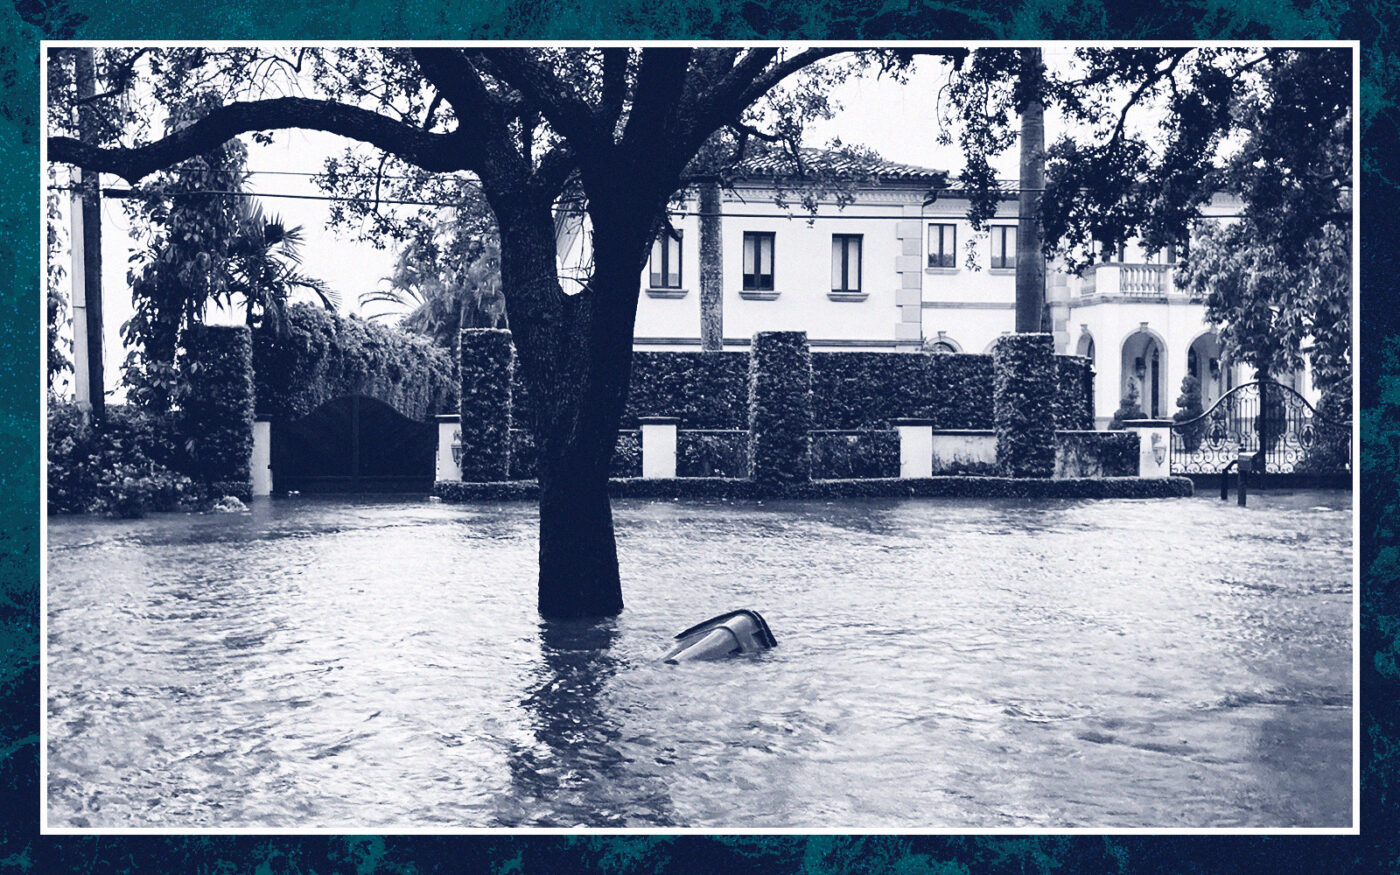 South Florida’s Severe Flooding Delayed Real Estate Deals